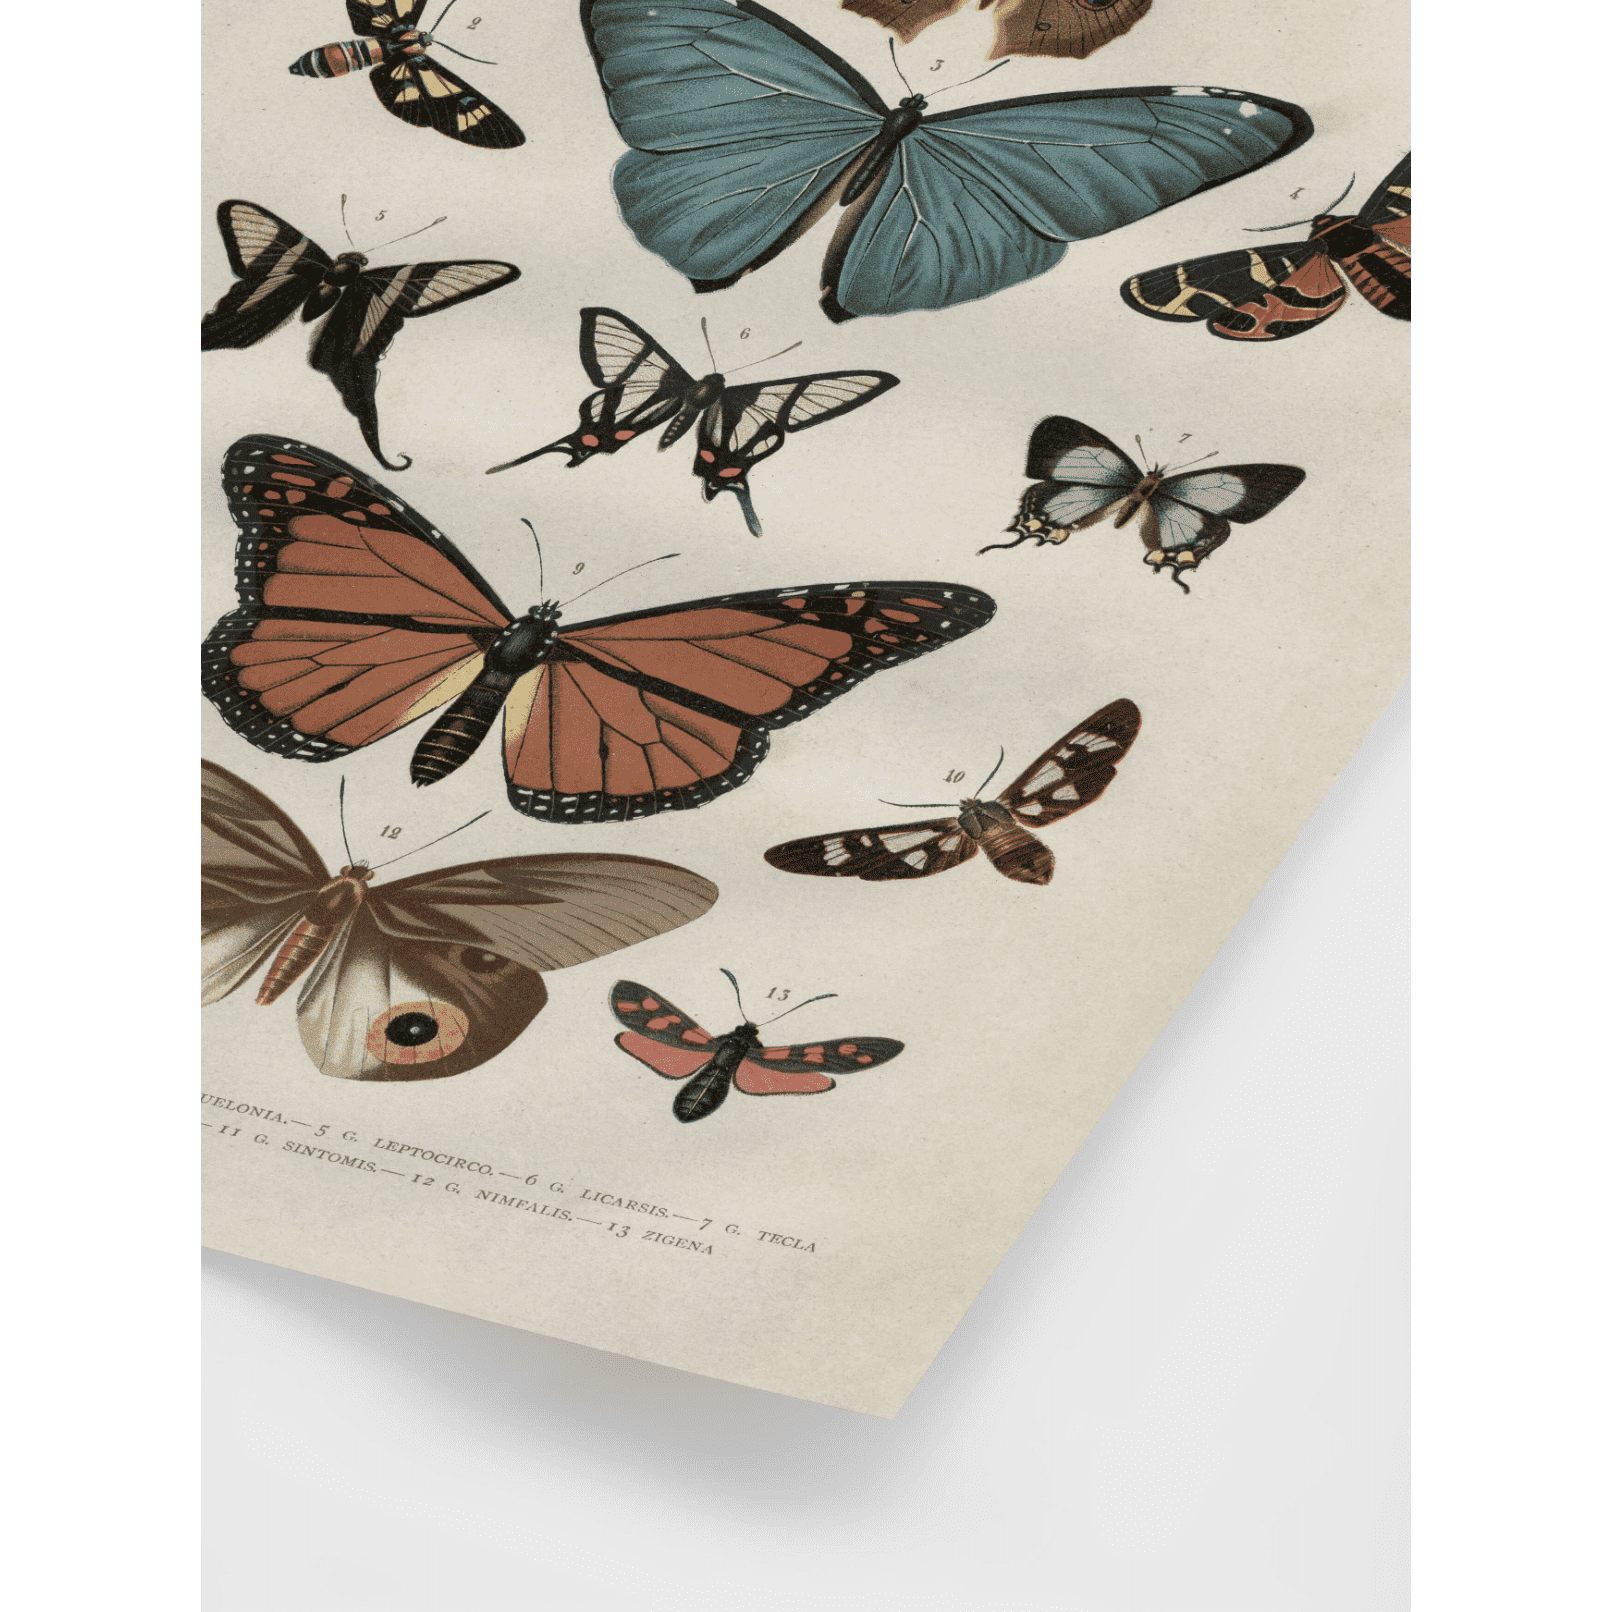 Vintage Butterflies Poster